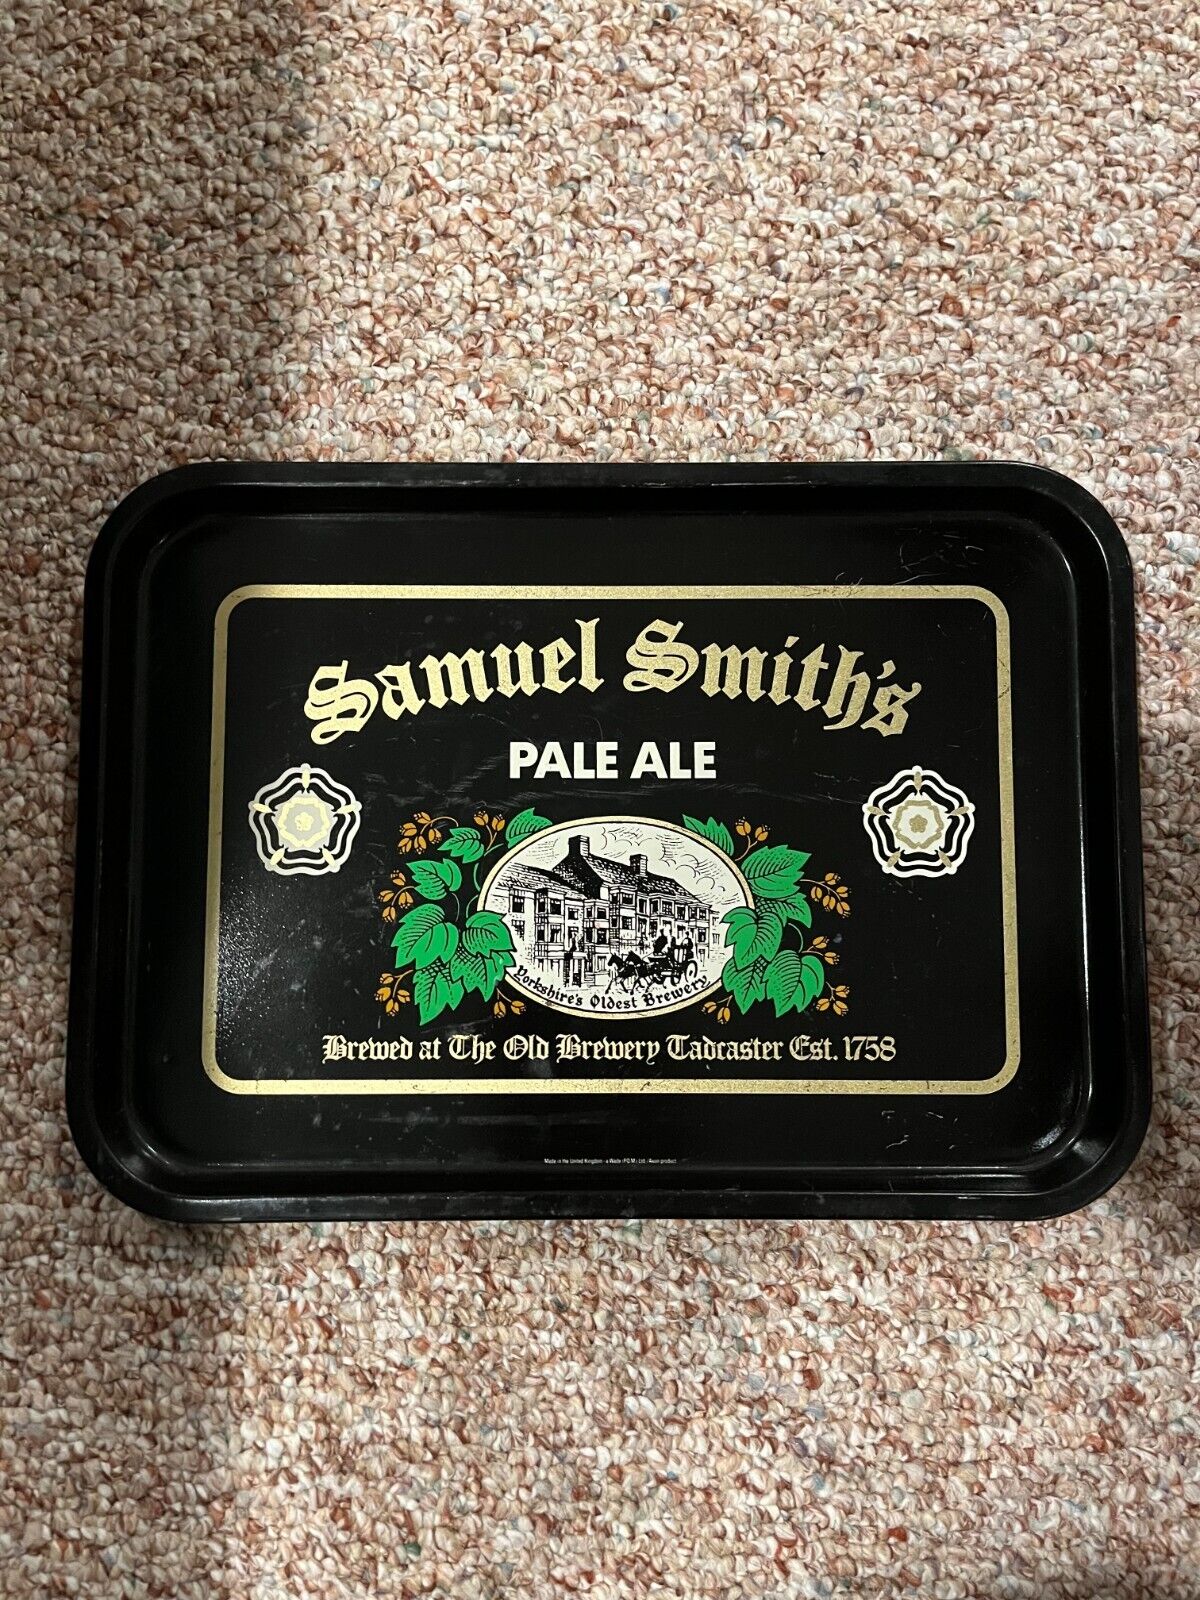 Vintage Samuel Smith's Pale Ale Metal Tray